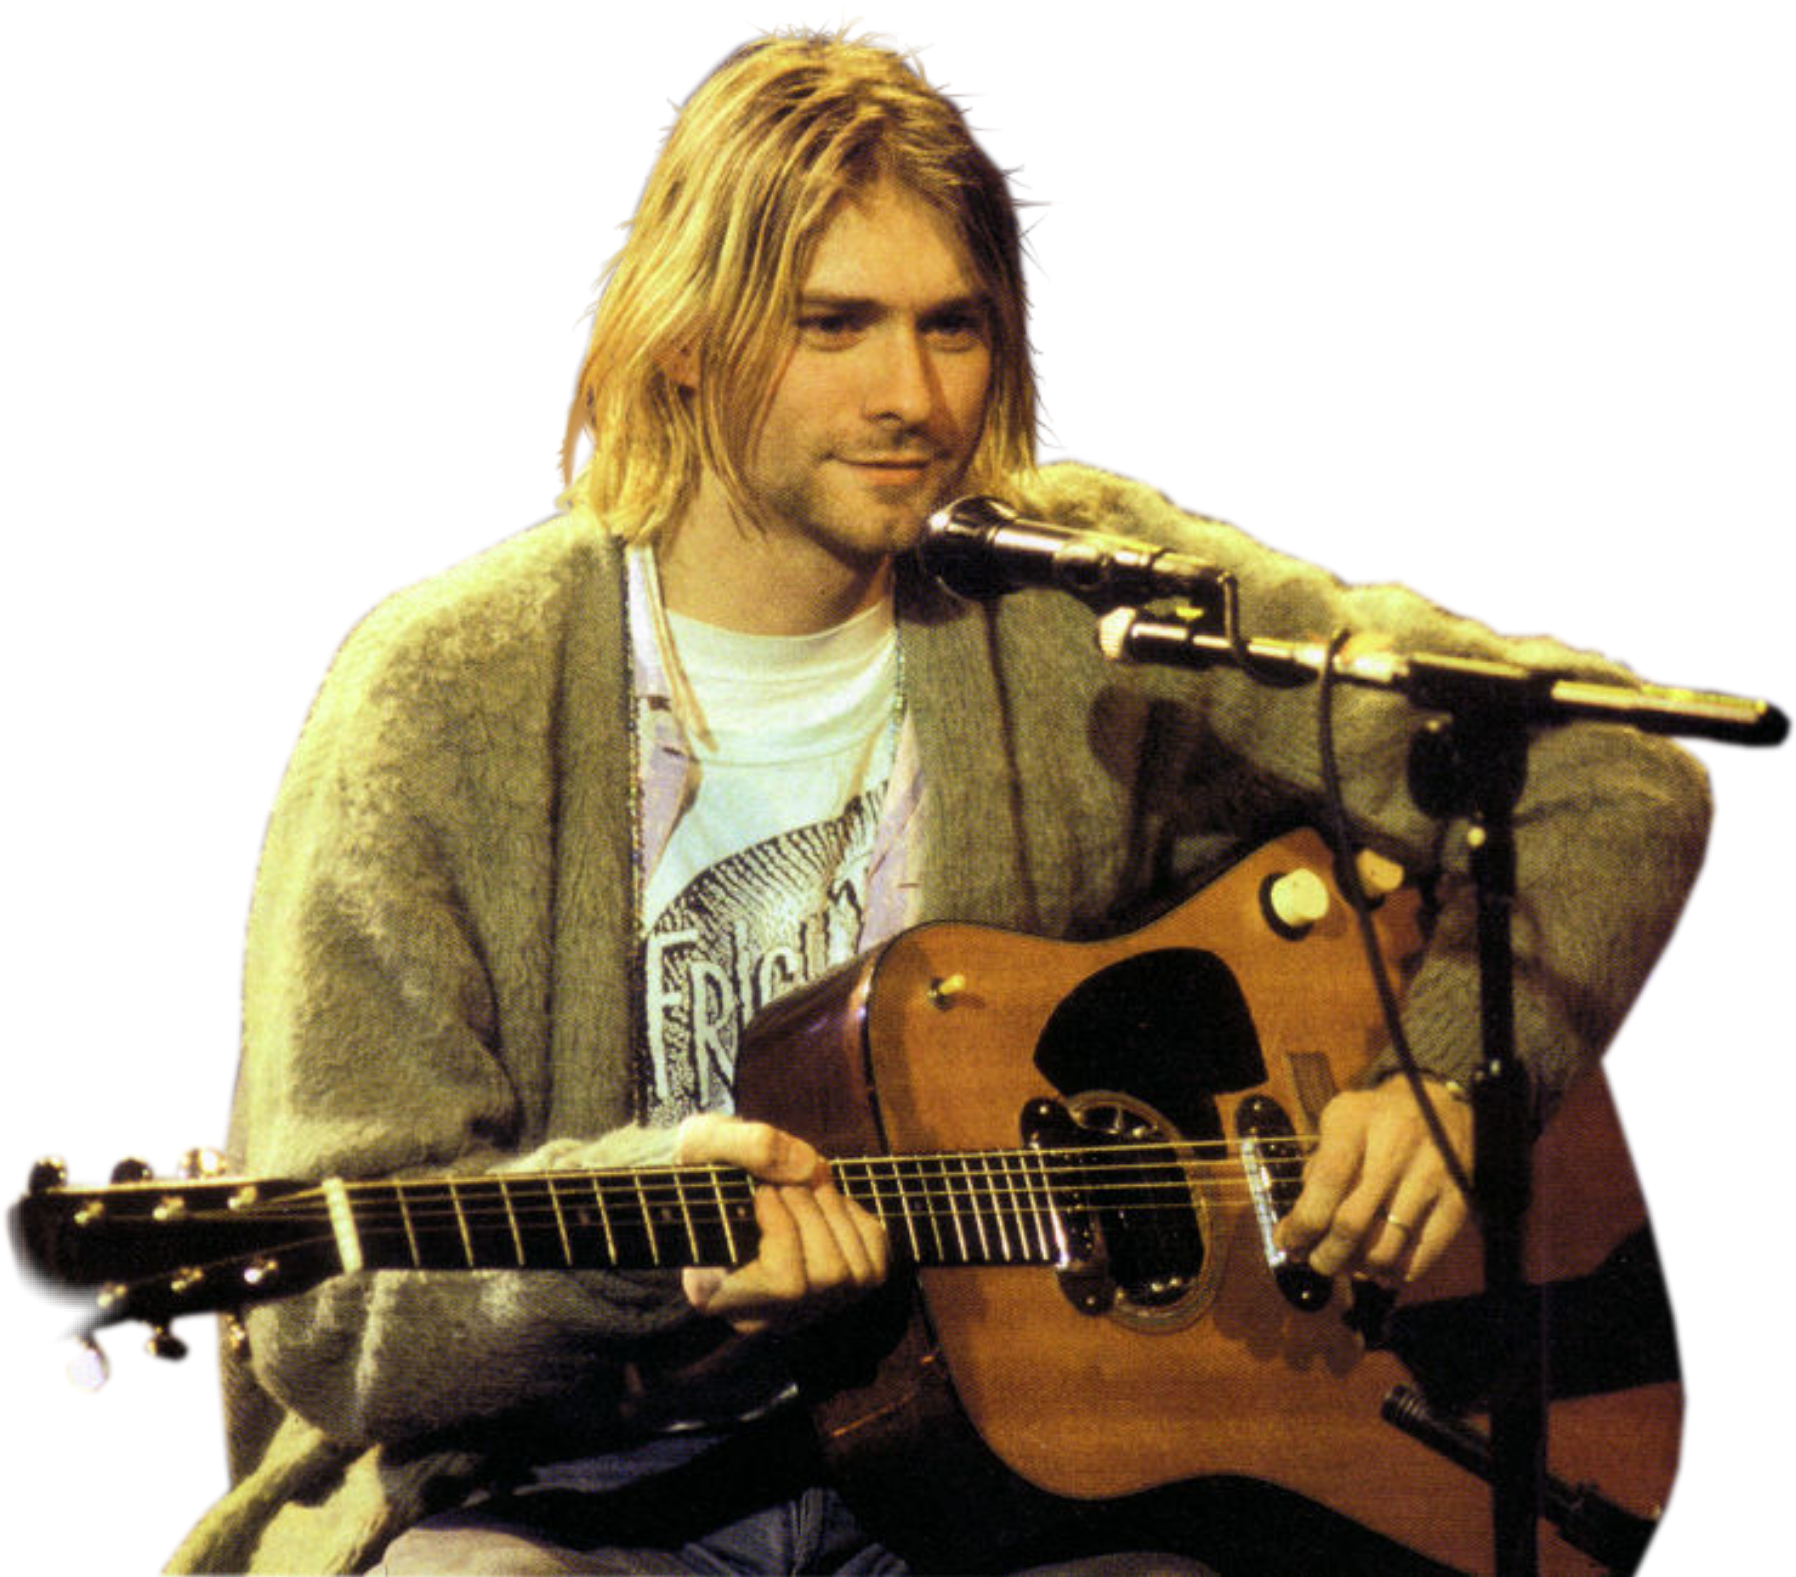 Nirvana guitar. Курт Кобейн и Nirvana. Rehrj,TBY. Rewh RJ,Qty. Курт RJ,TQYPNG.